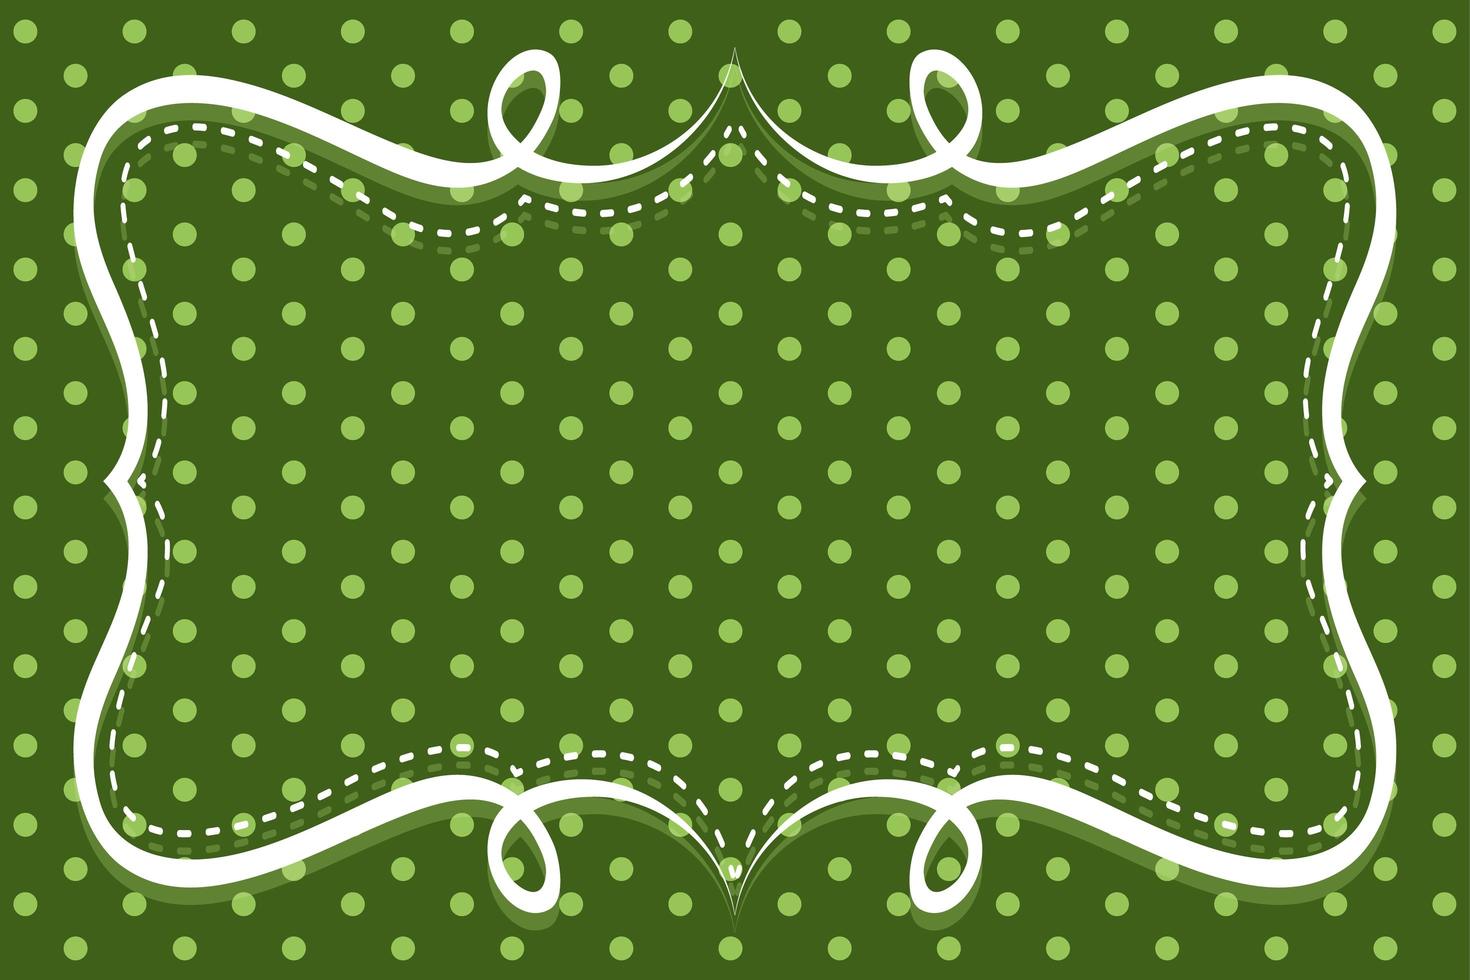 Polka dot on green background vector